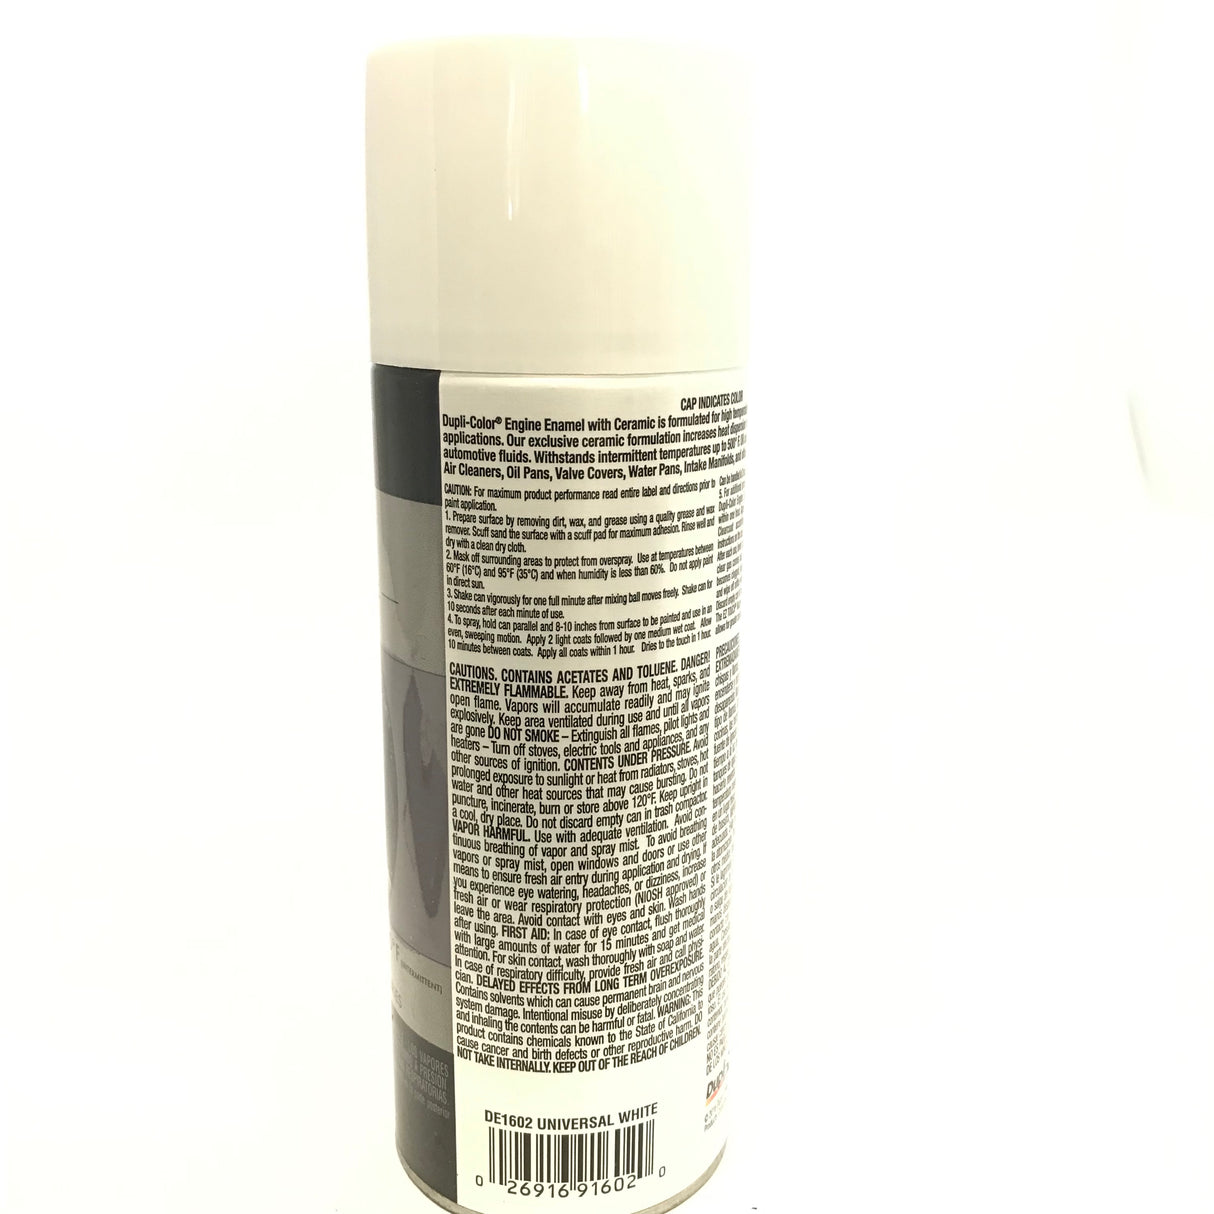 12 oz. Protective Enamel Gloss Sand Spray Paint (6-pack)